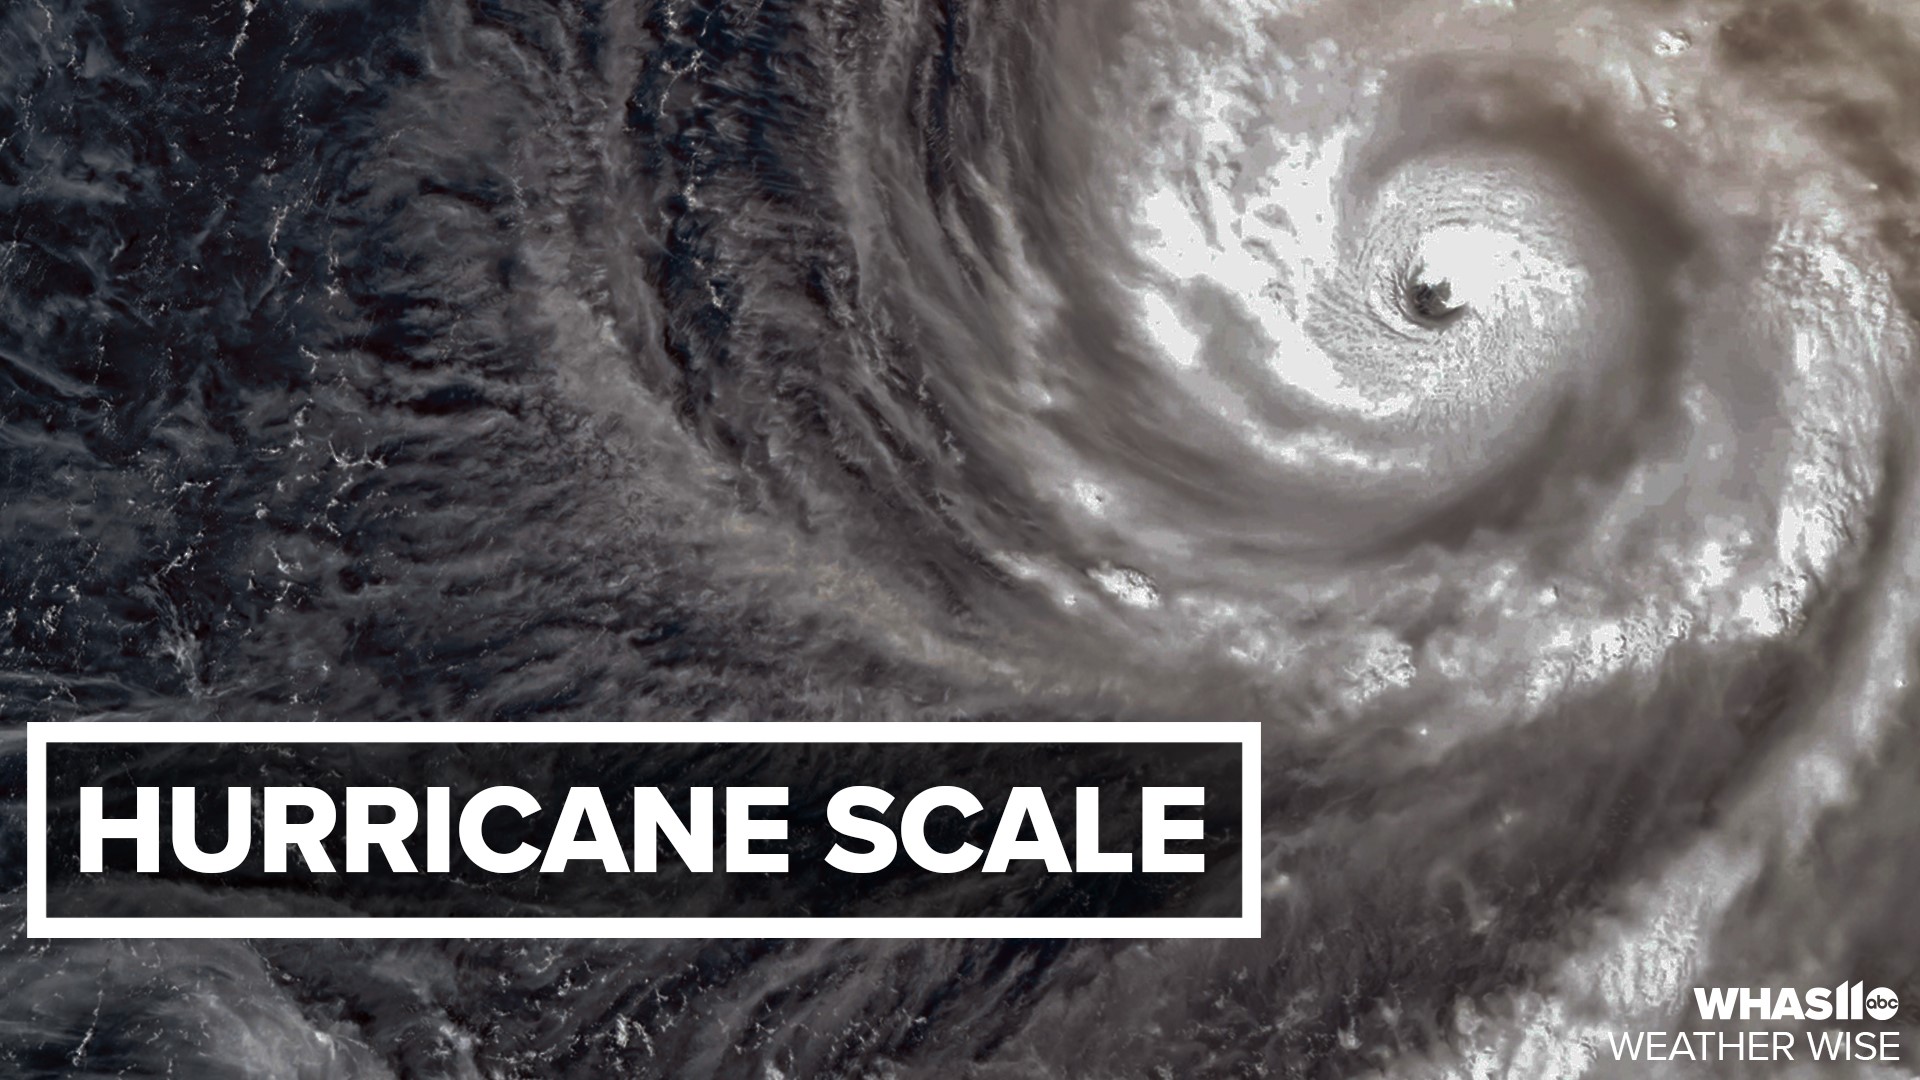 Hurricane season officially starts June 1.